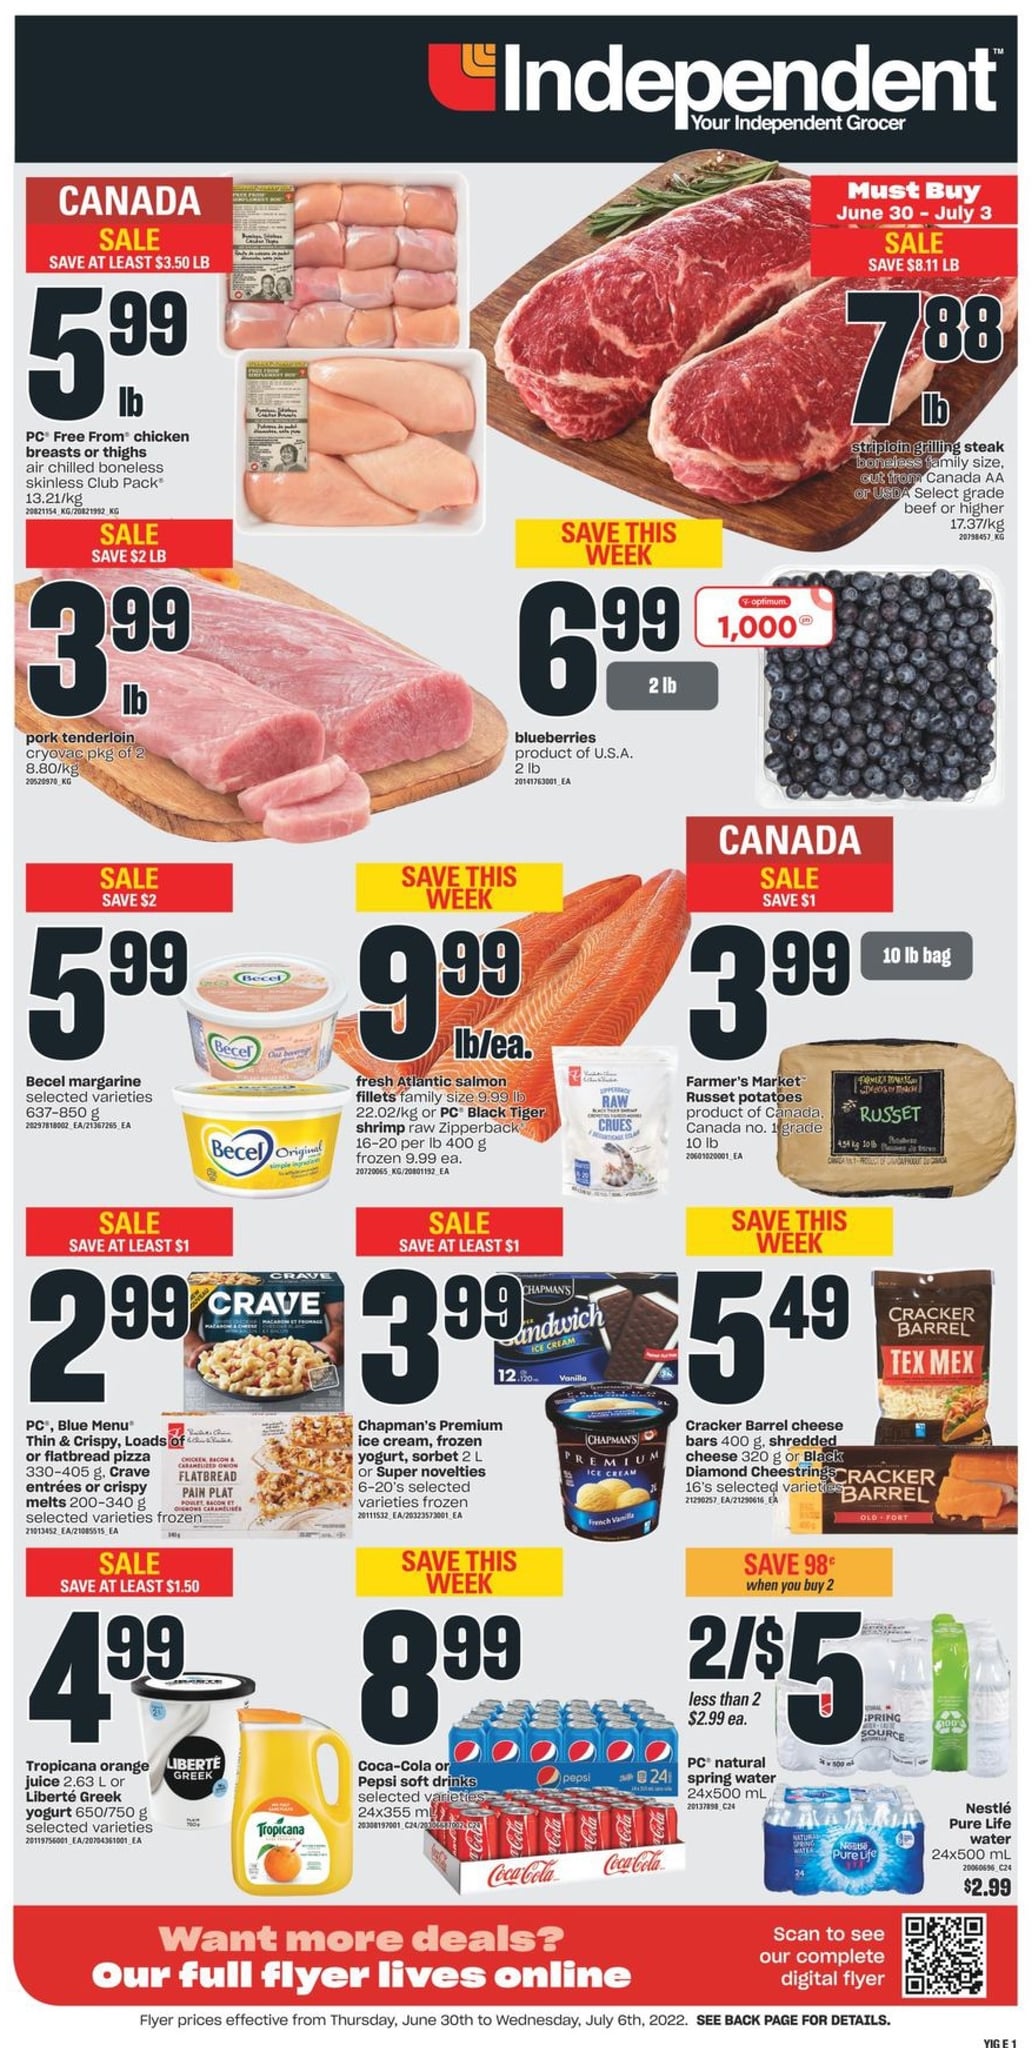 Image de la Promotion Independent Ontario - Weekly Flyer Specials